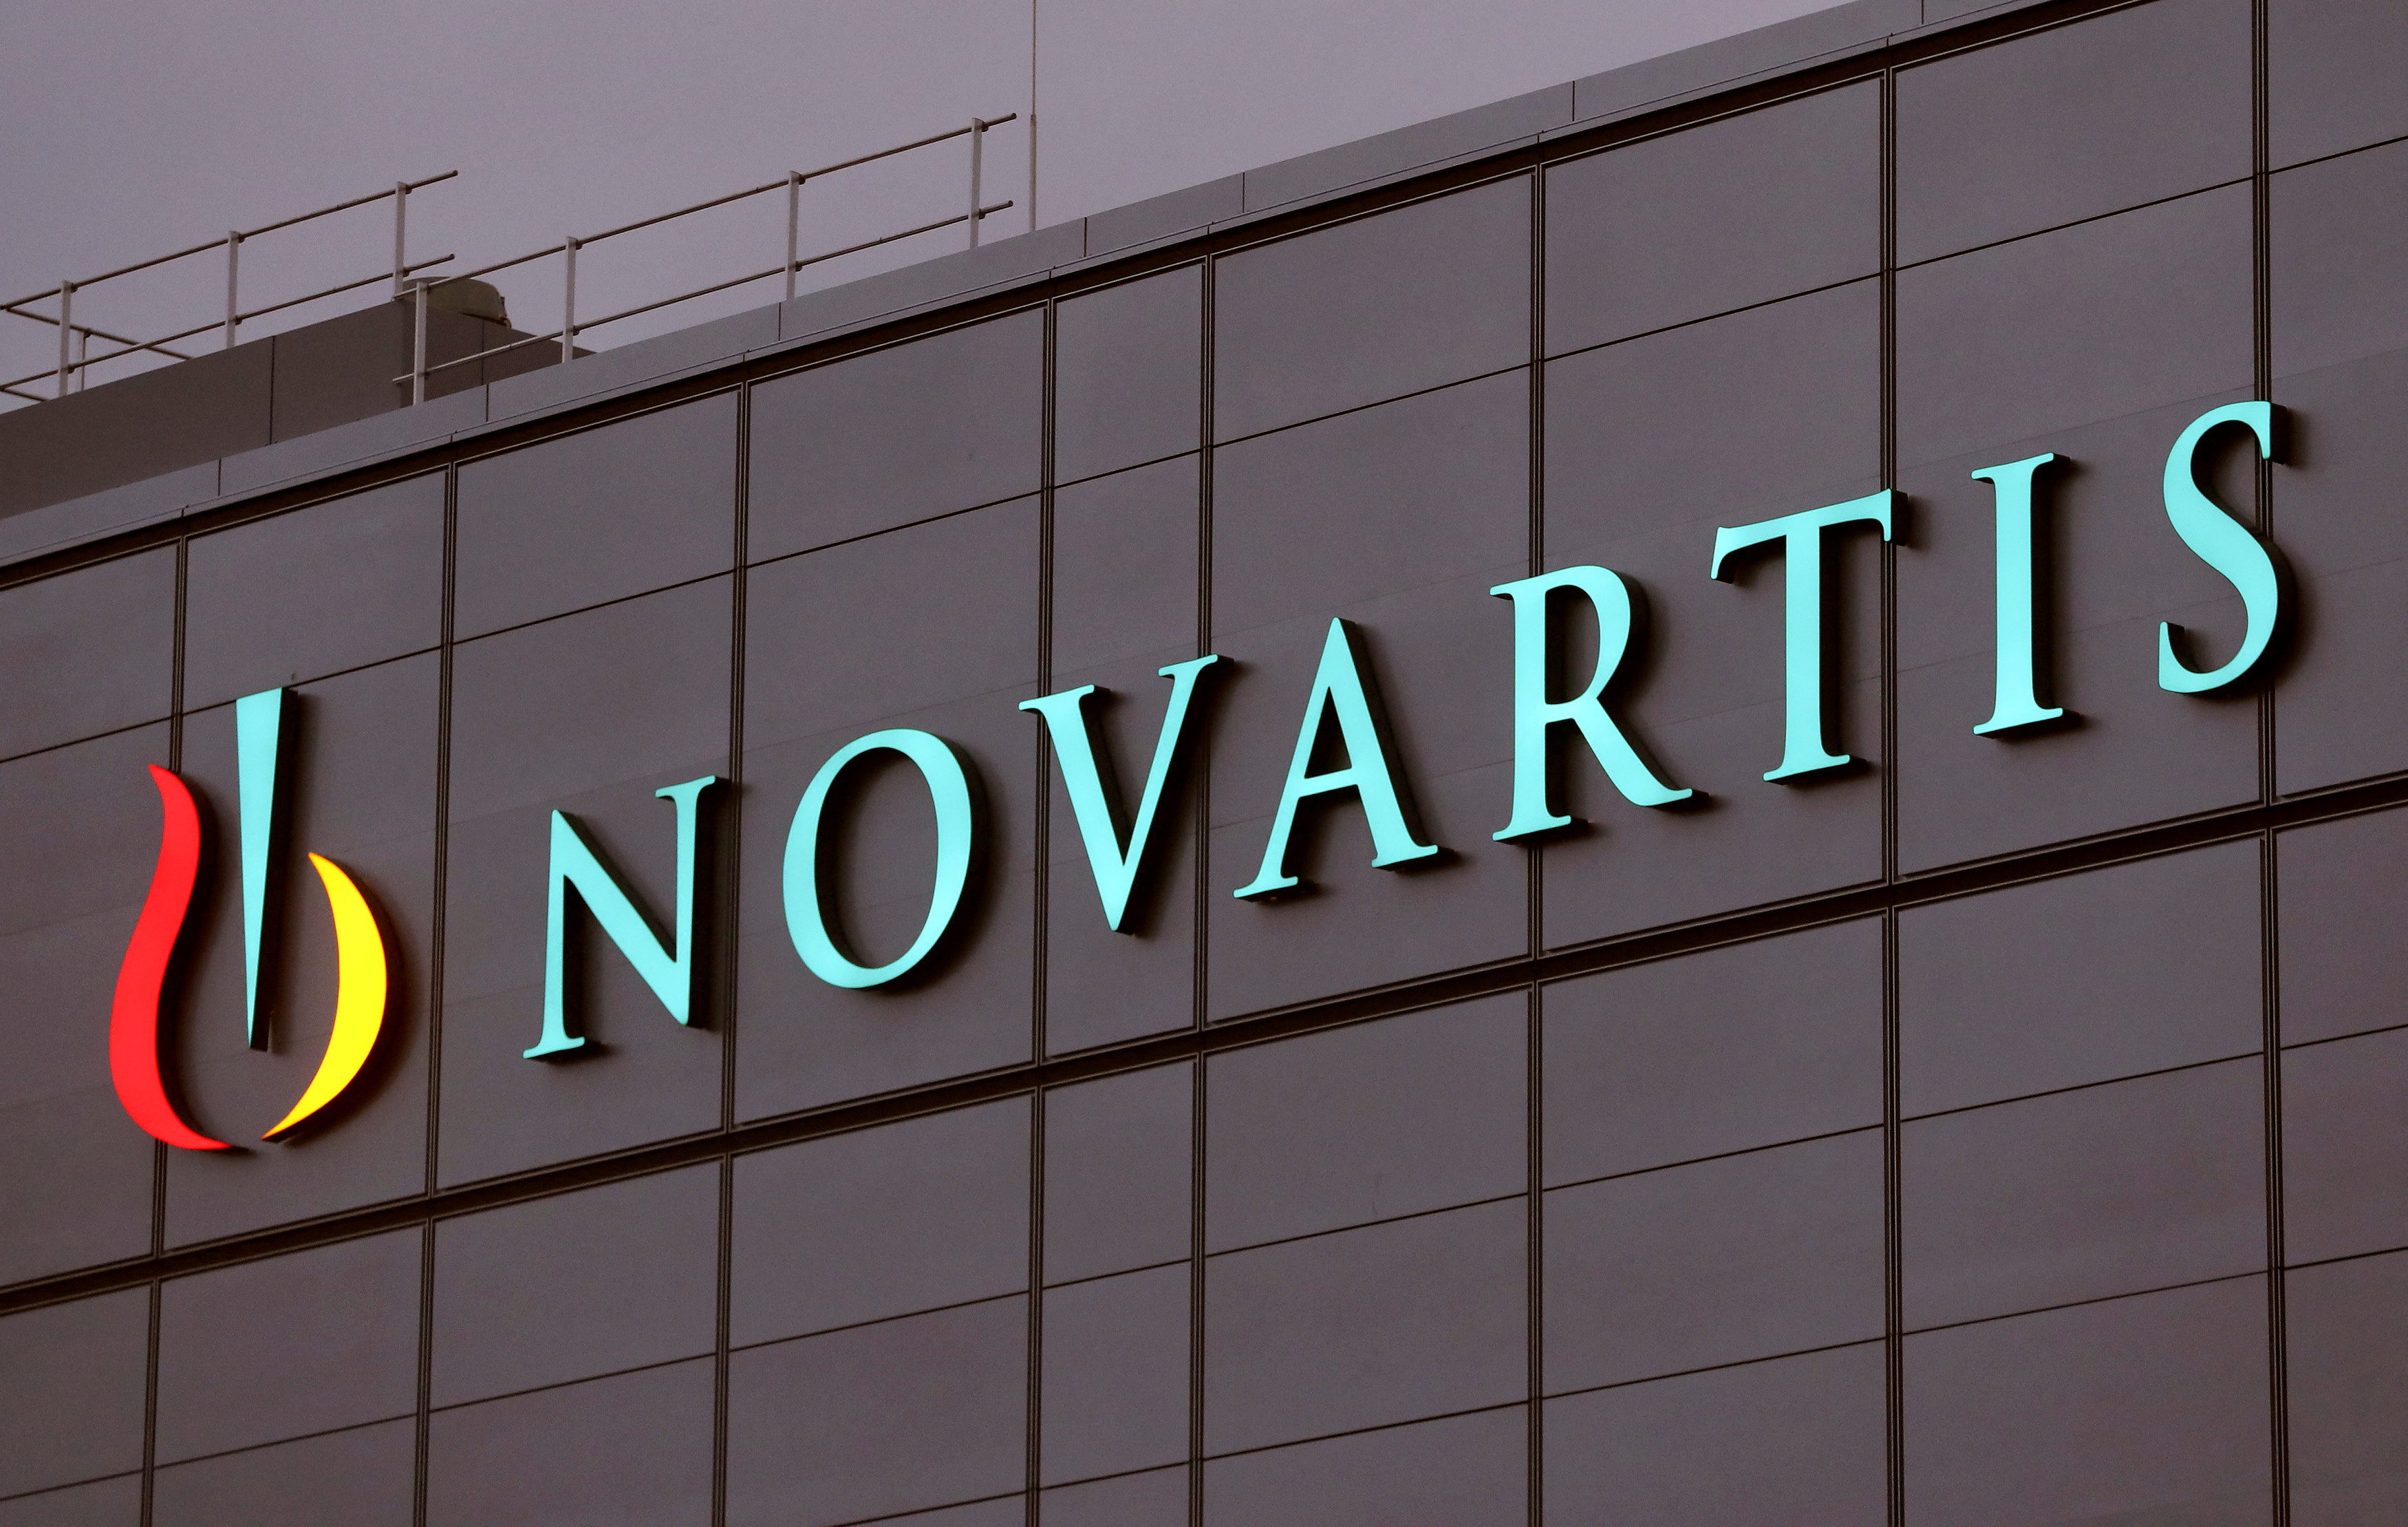 Swiss drugmaker Novartis' logo is seen in Stein